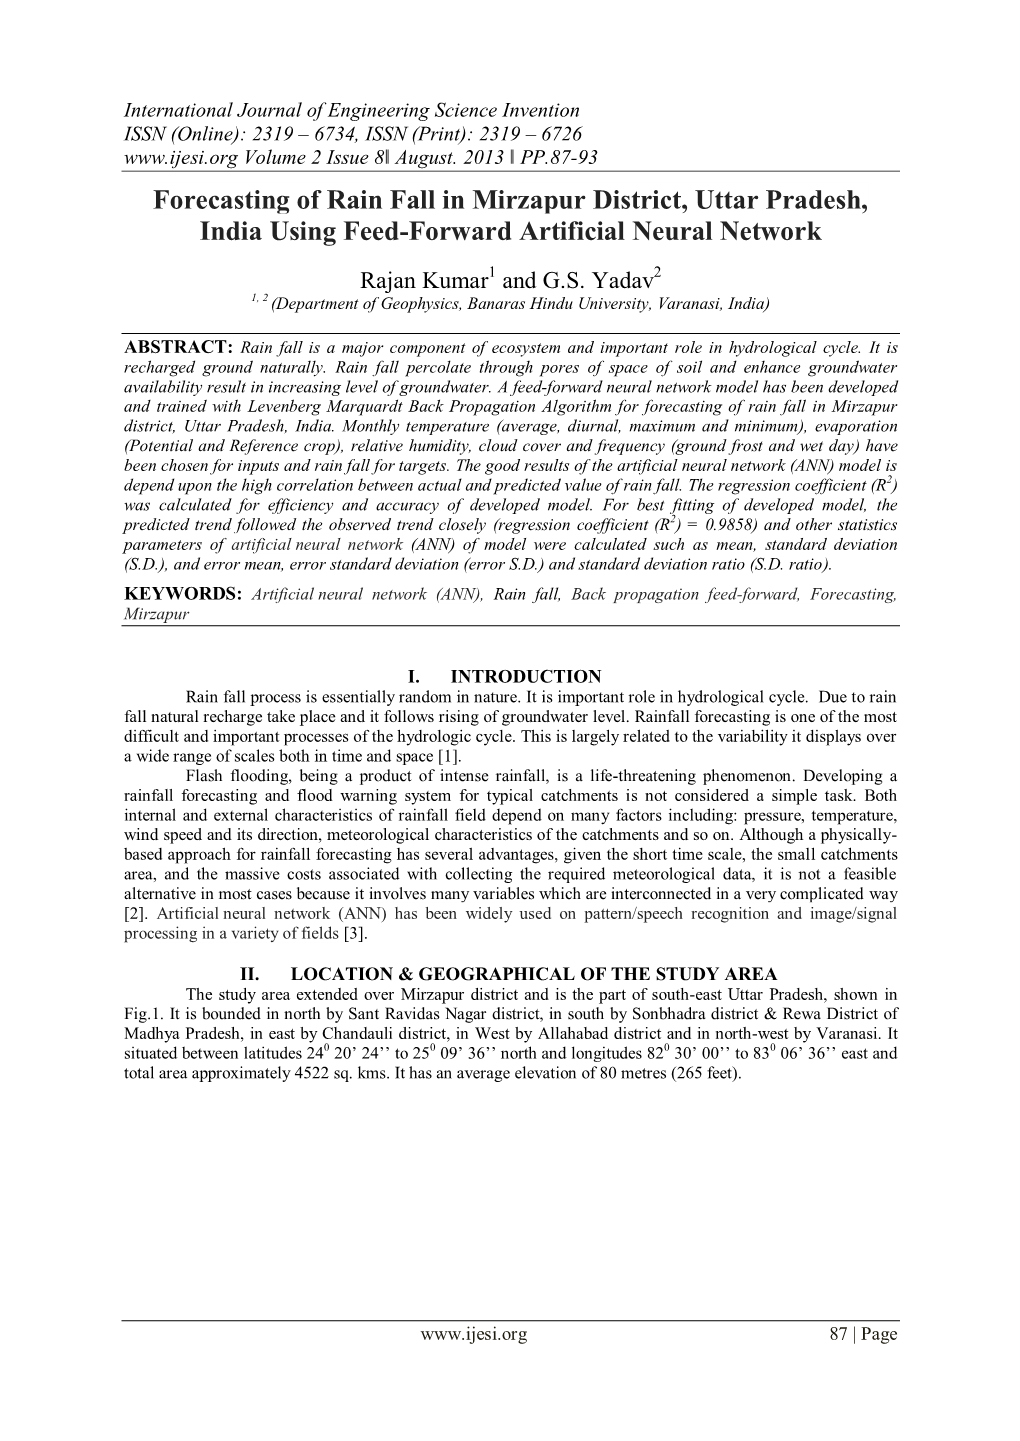 Forecasting of Rain Fall in Mirzapur District, Uttar Pradesh, India Using Feed-Forward Artificial Neural Network